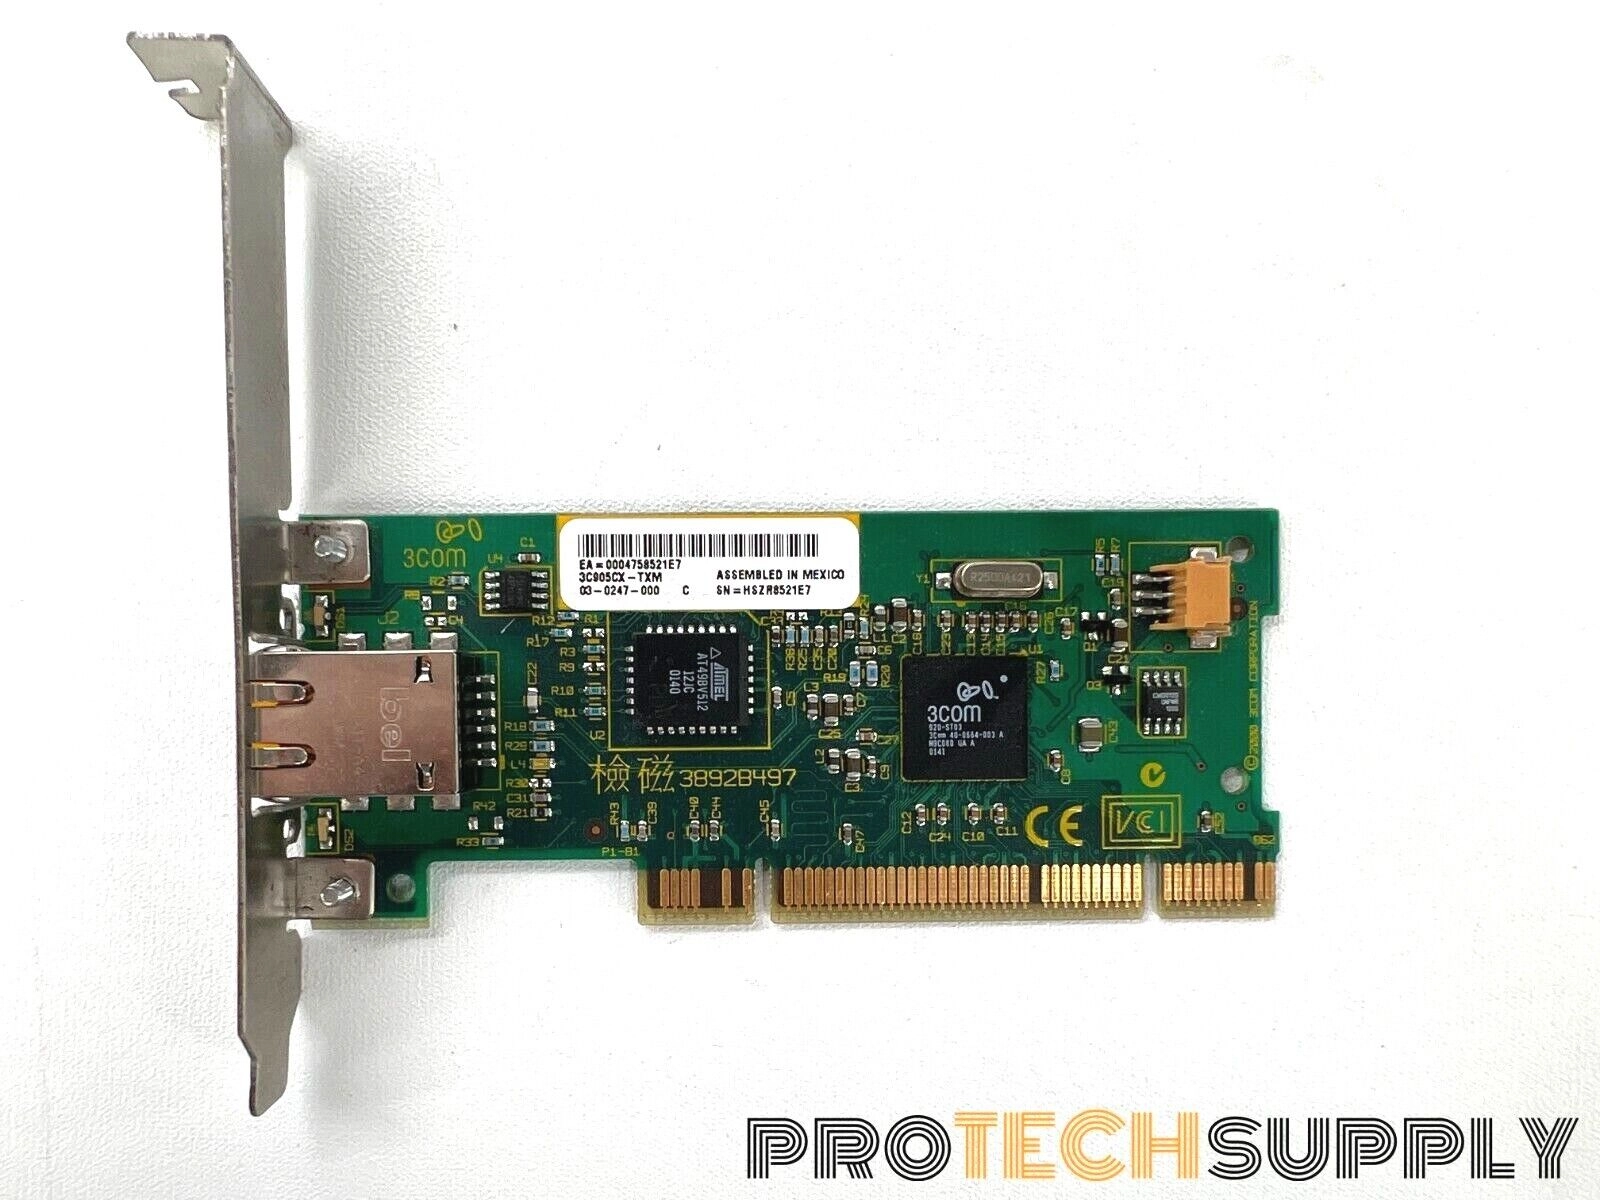 3com 3C905CX-TXM 10/100Mbps PCI Network Card with 